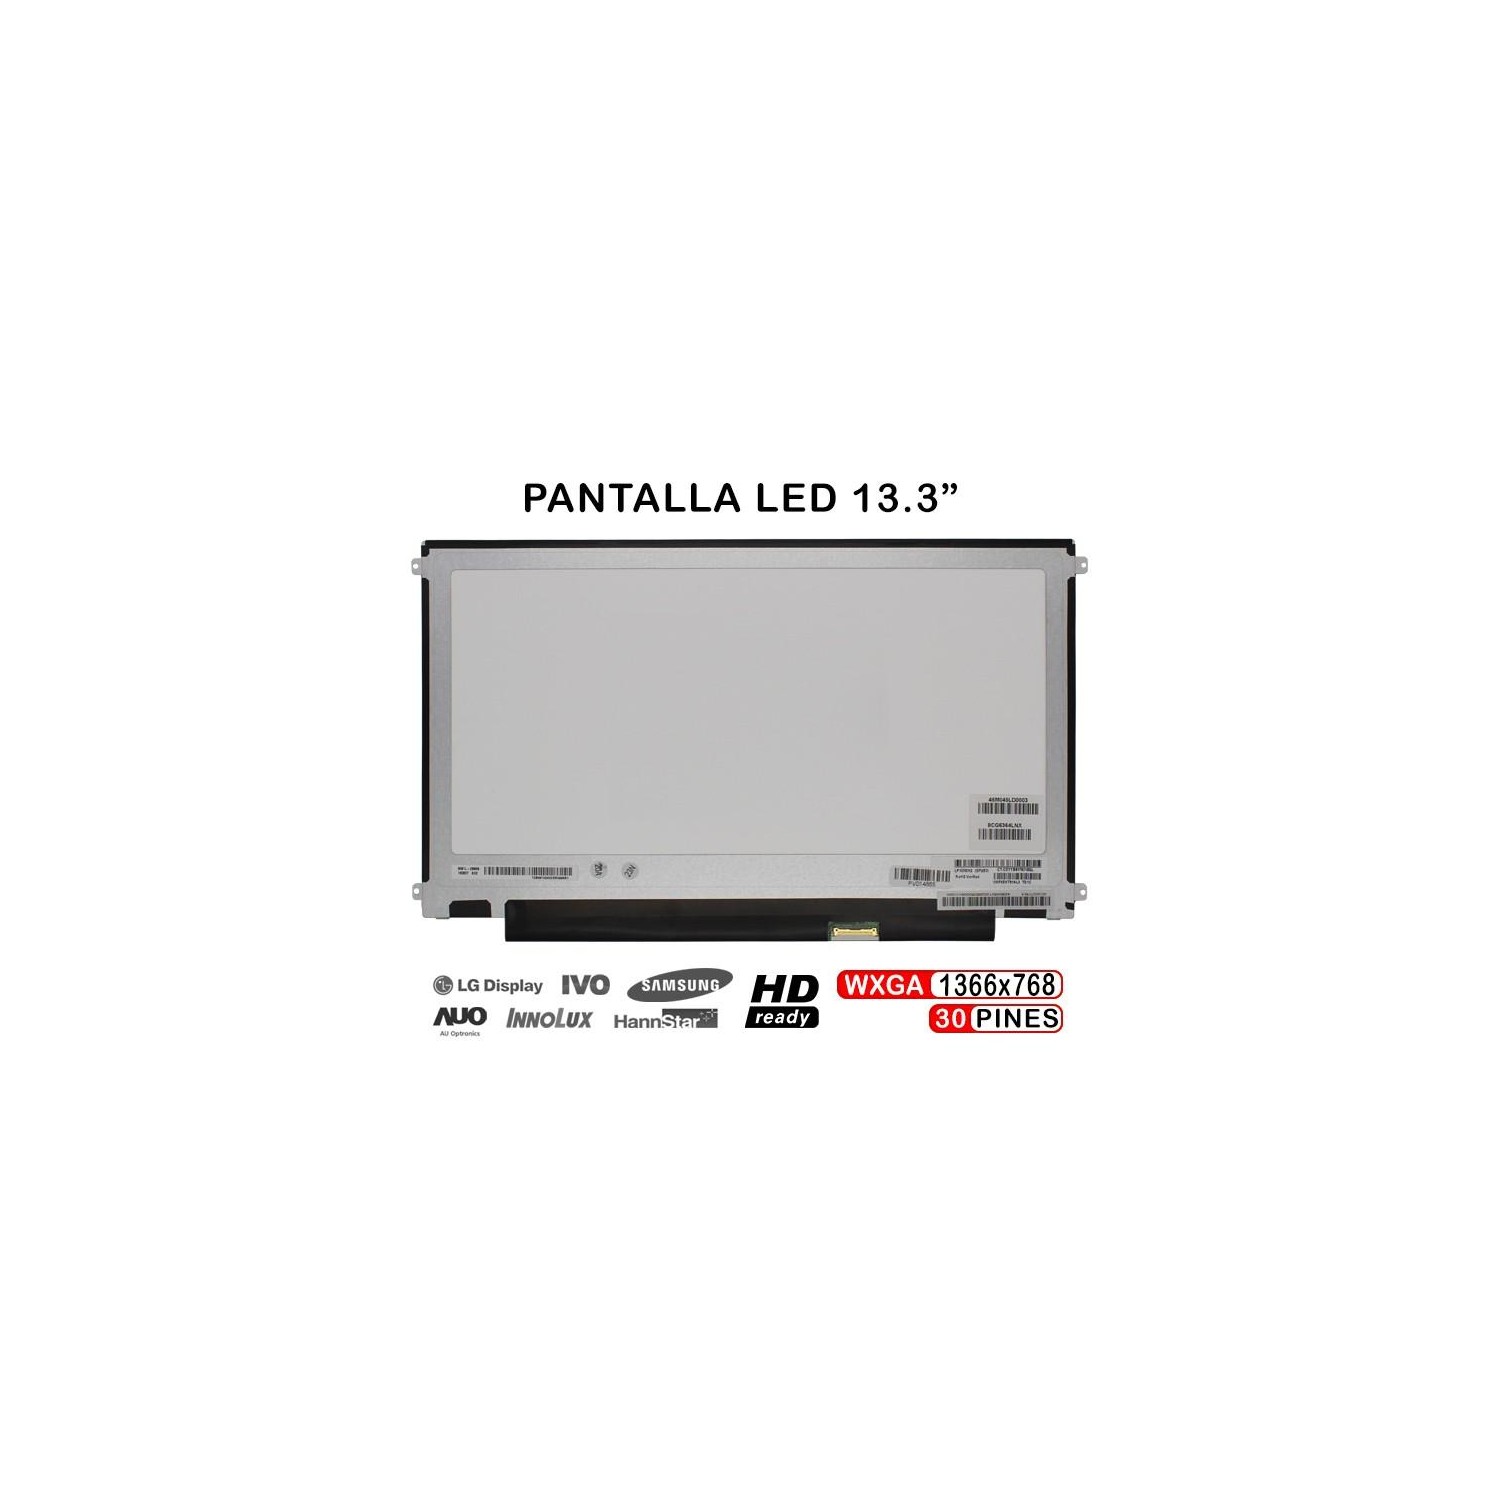 PANTALLA LED DE 13.3" PARA PORTÁTIL HP LP133WH2(SP)(B3)